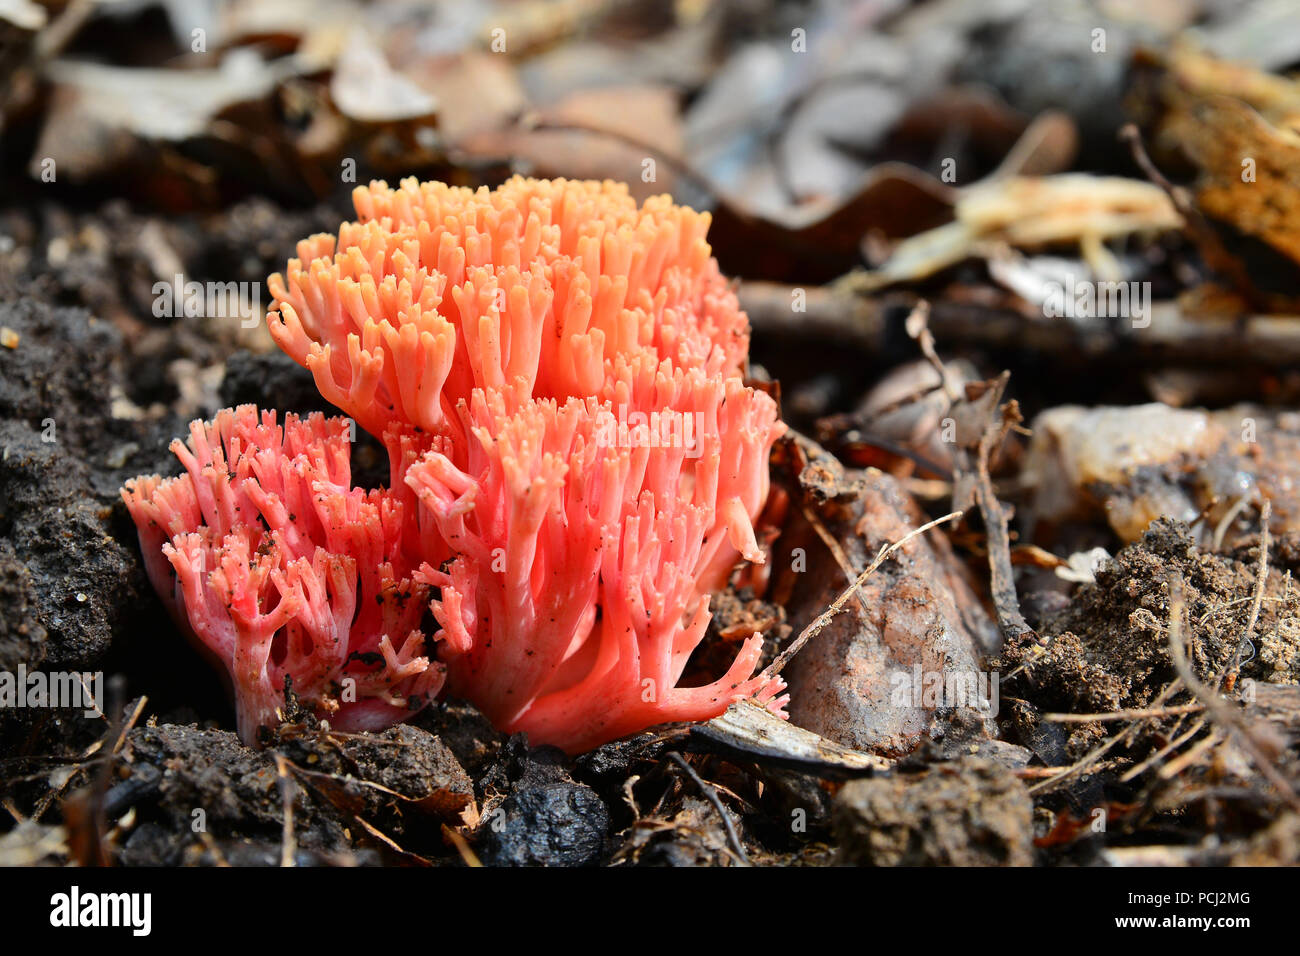 ramaria botrytis mushroom cluster on the ground Stock Photo